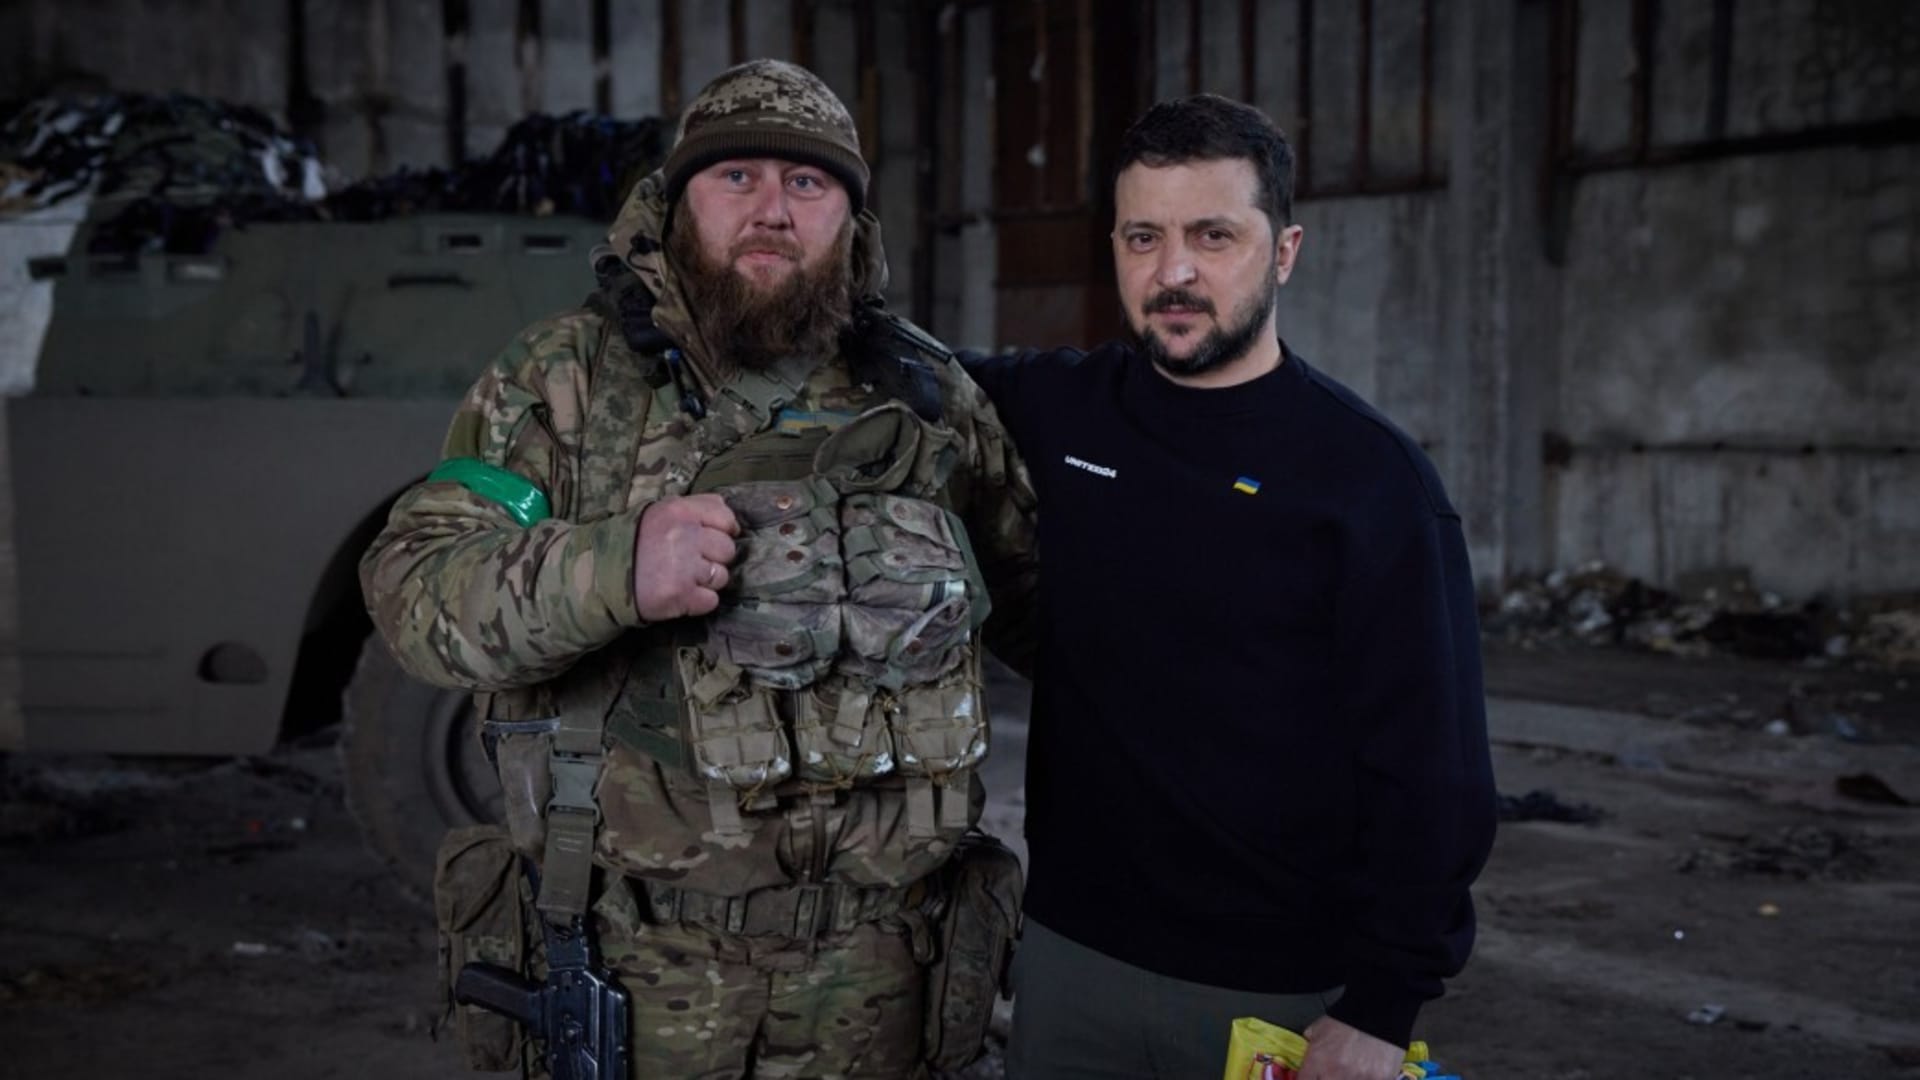  Ukrainian President Volodymyr Zelenskyy (R) poses for a photo with a Ukrainian soldier during his visit to Bakhmut frontline amid Russia-Ukraine war in Donetsk region, Bakhmut, Ukraine on March 22, 2023. 